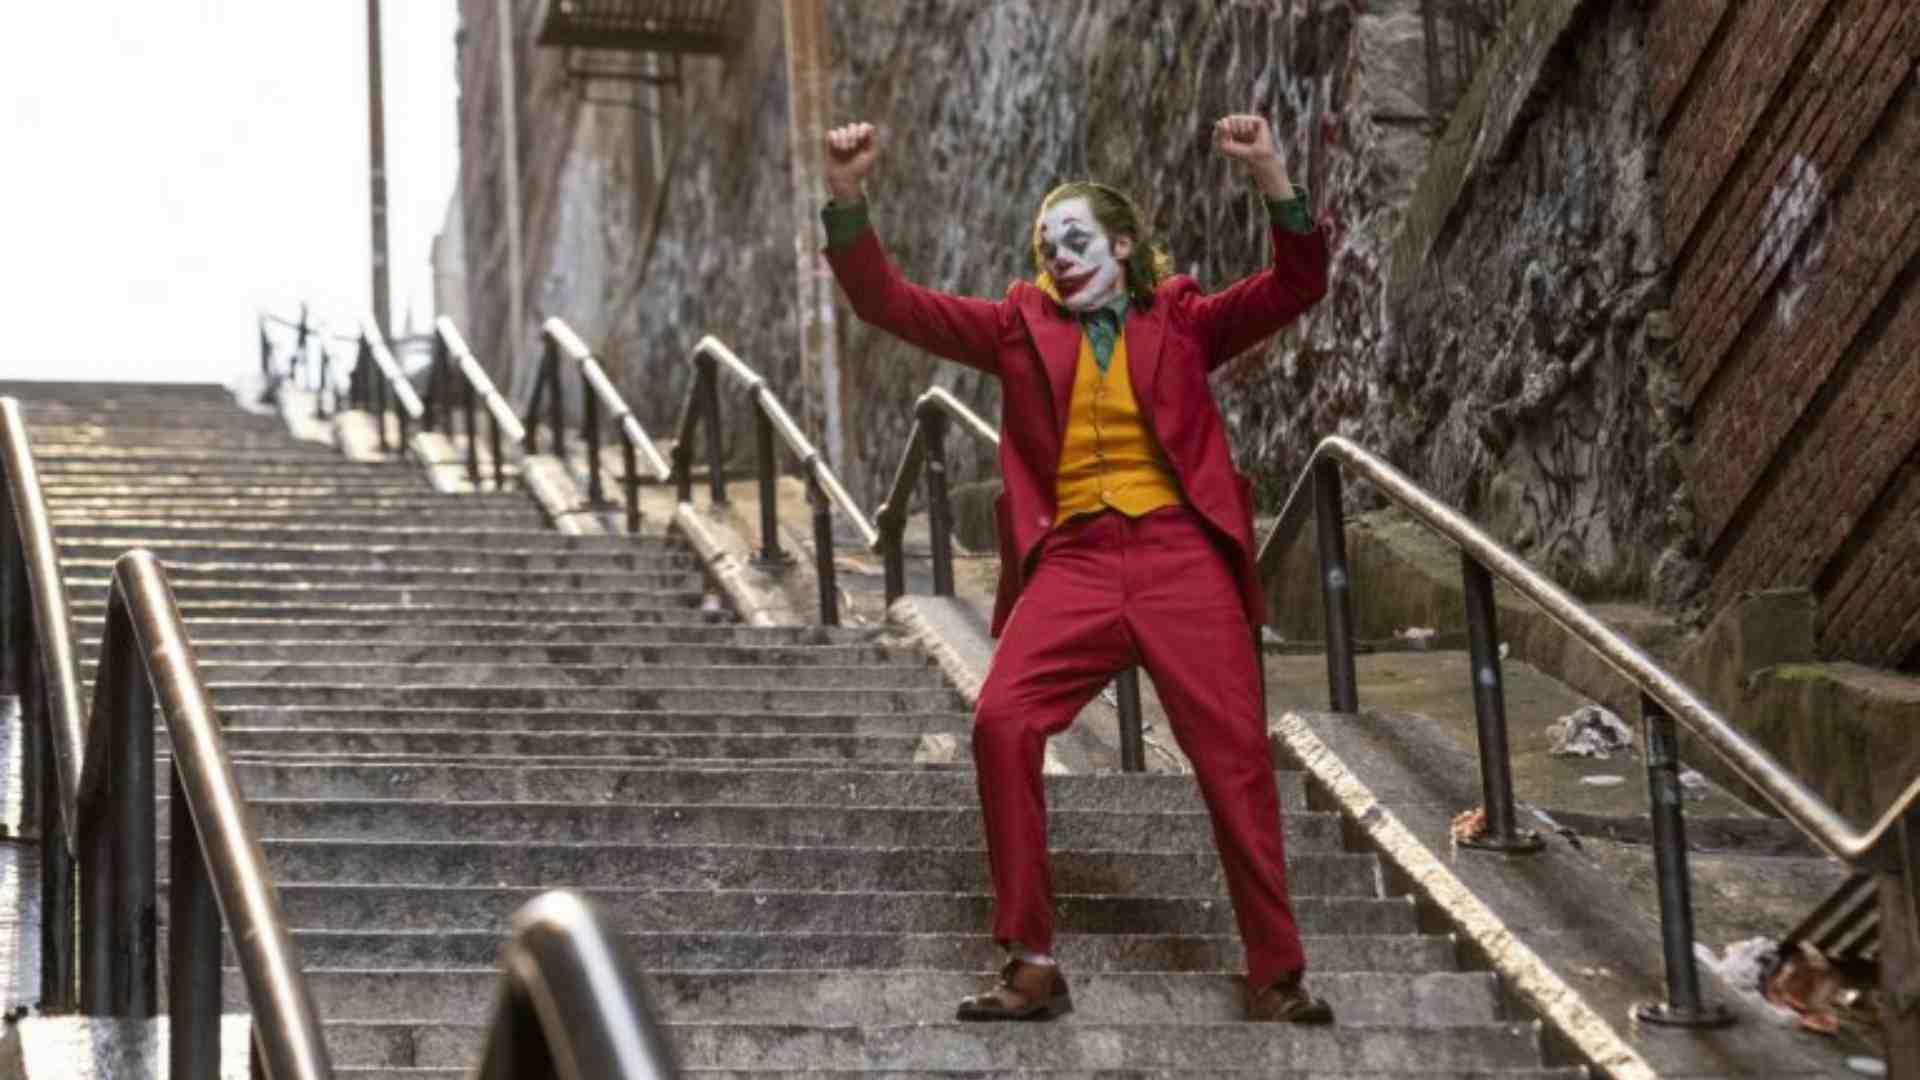 Escaleras Joker Bronx